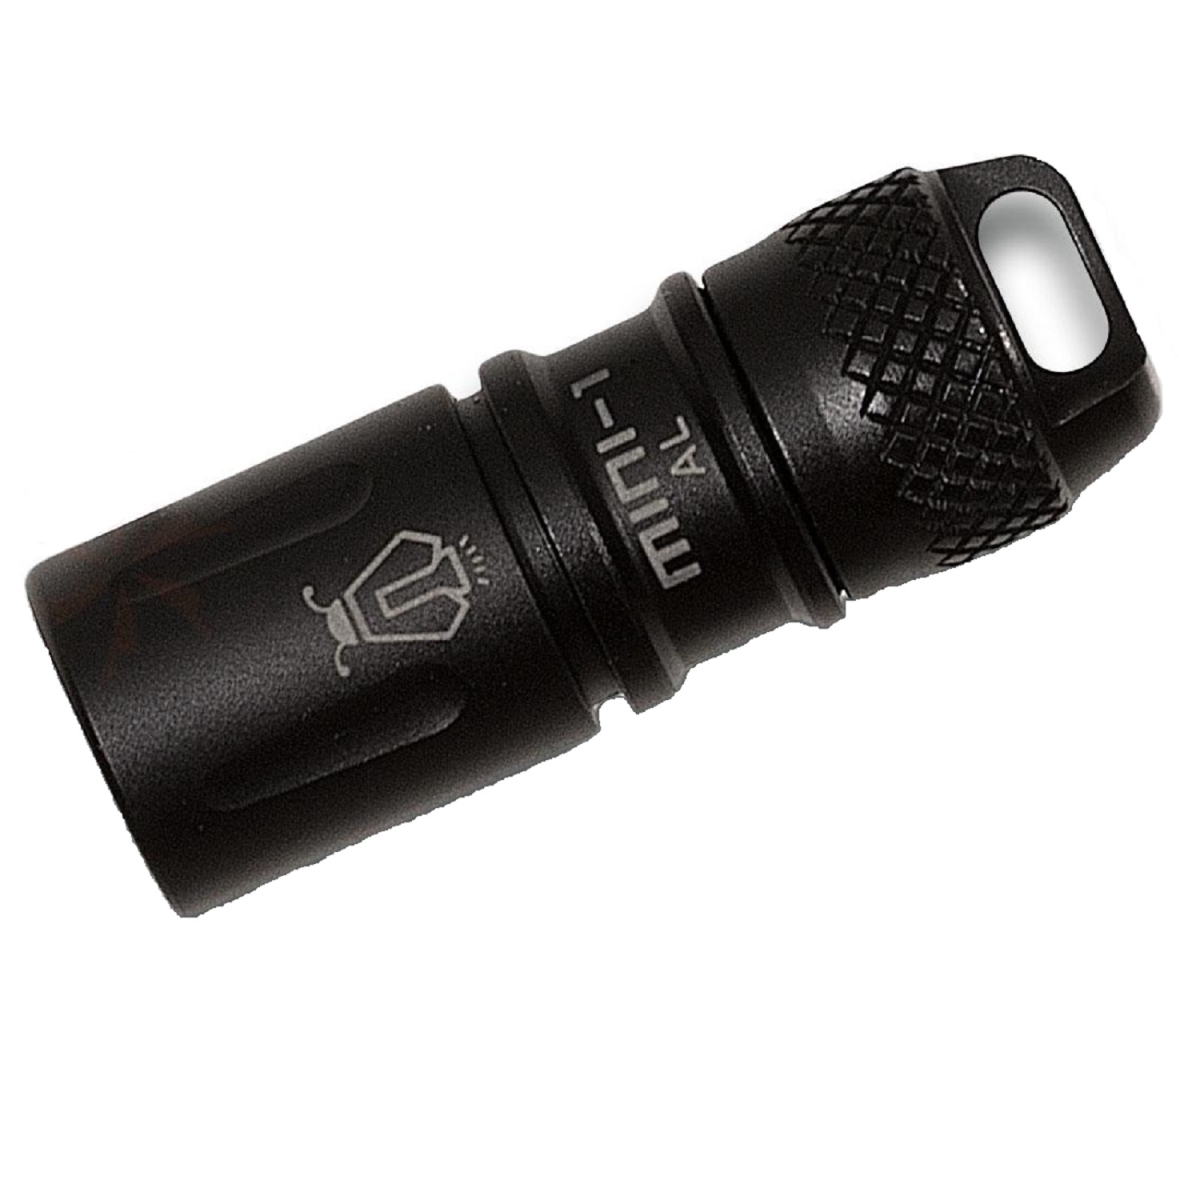 Mini-al Keychain Flashlight, Black Aluminum